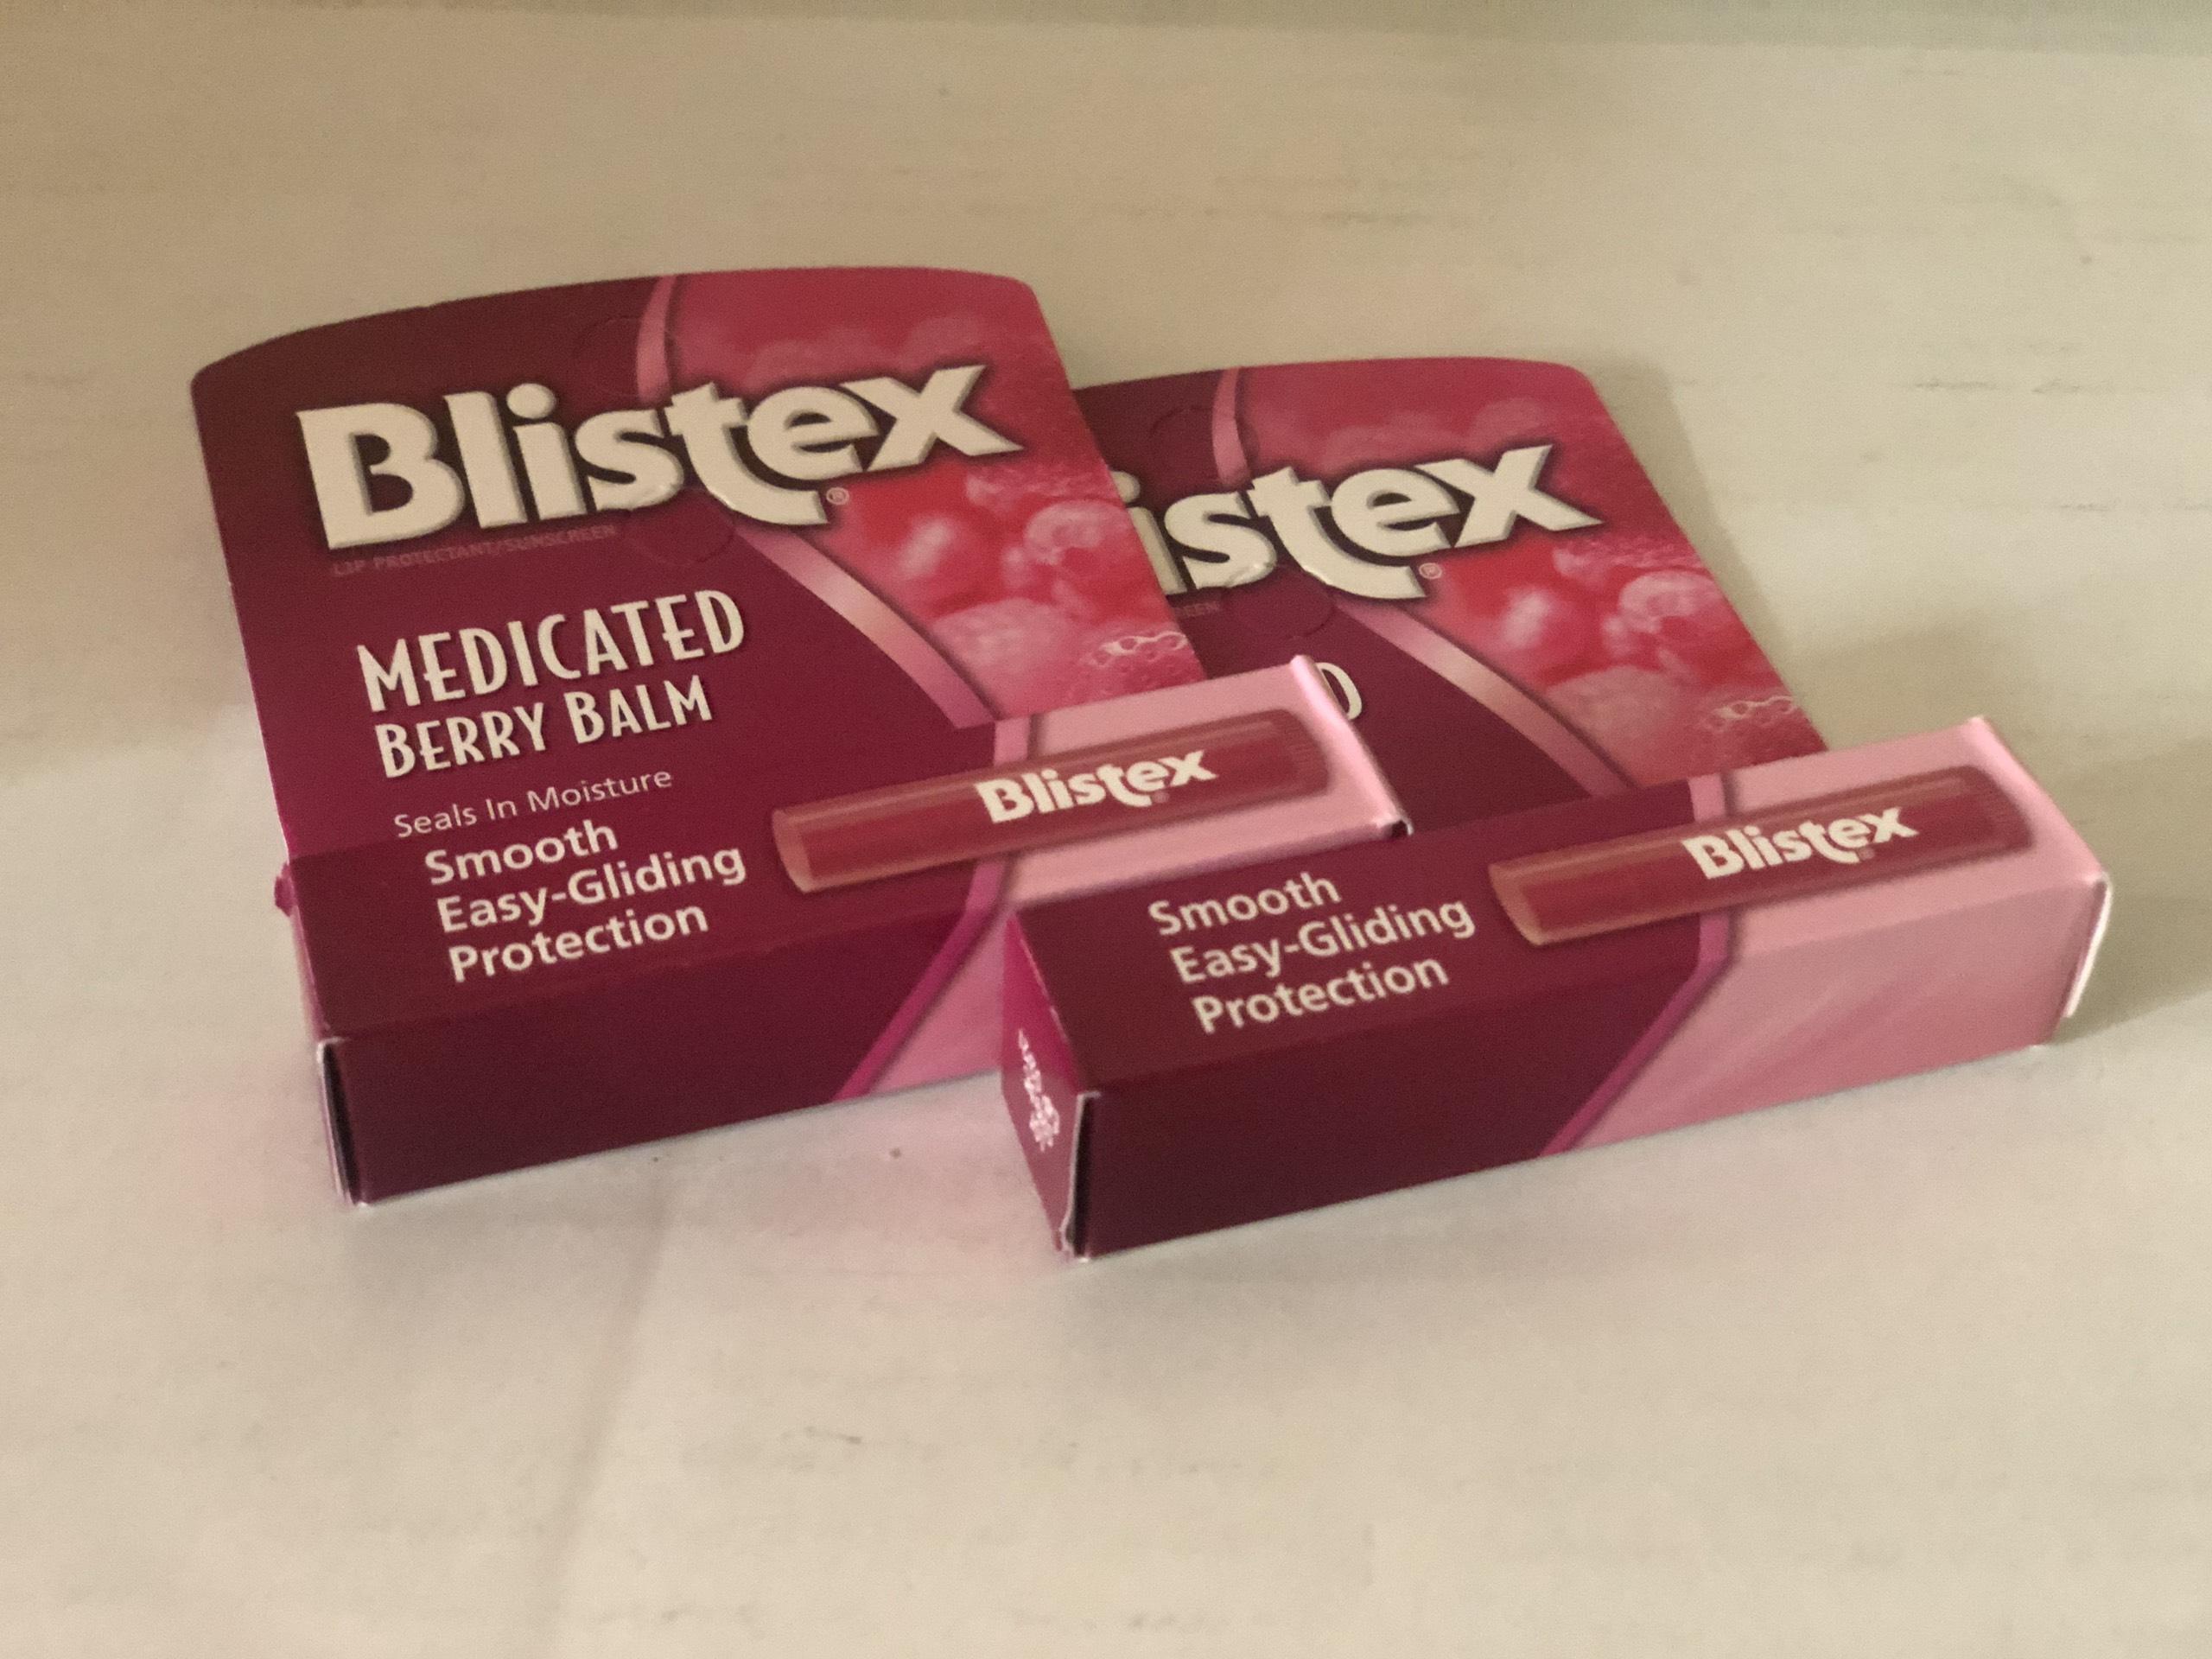 Son dưỡng Blistex Medicated Berry Balm